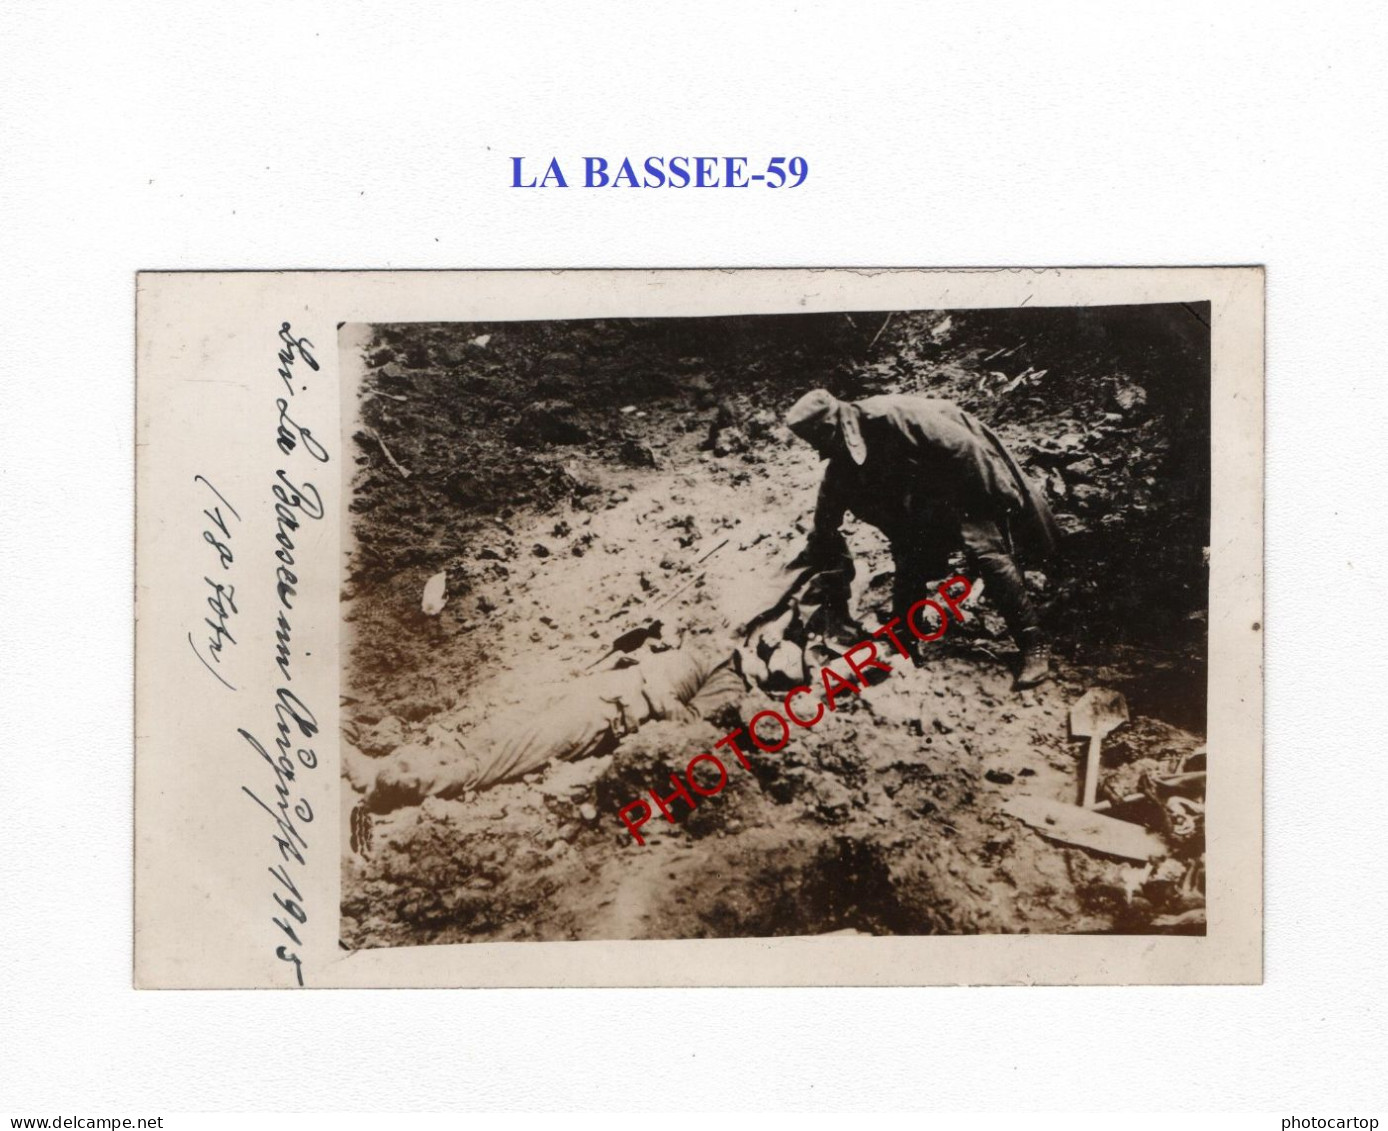 LA BASSEE-59-Tranchee-CADAVRES-18x MORTS-Aout 1915-CARTE PHOTO Allemande-GUERRE 14-18-1 WK-MILITARIA- - Guerre 1914-18